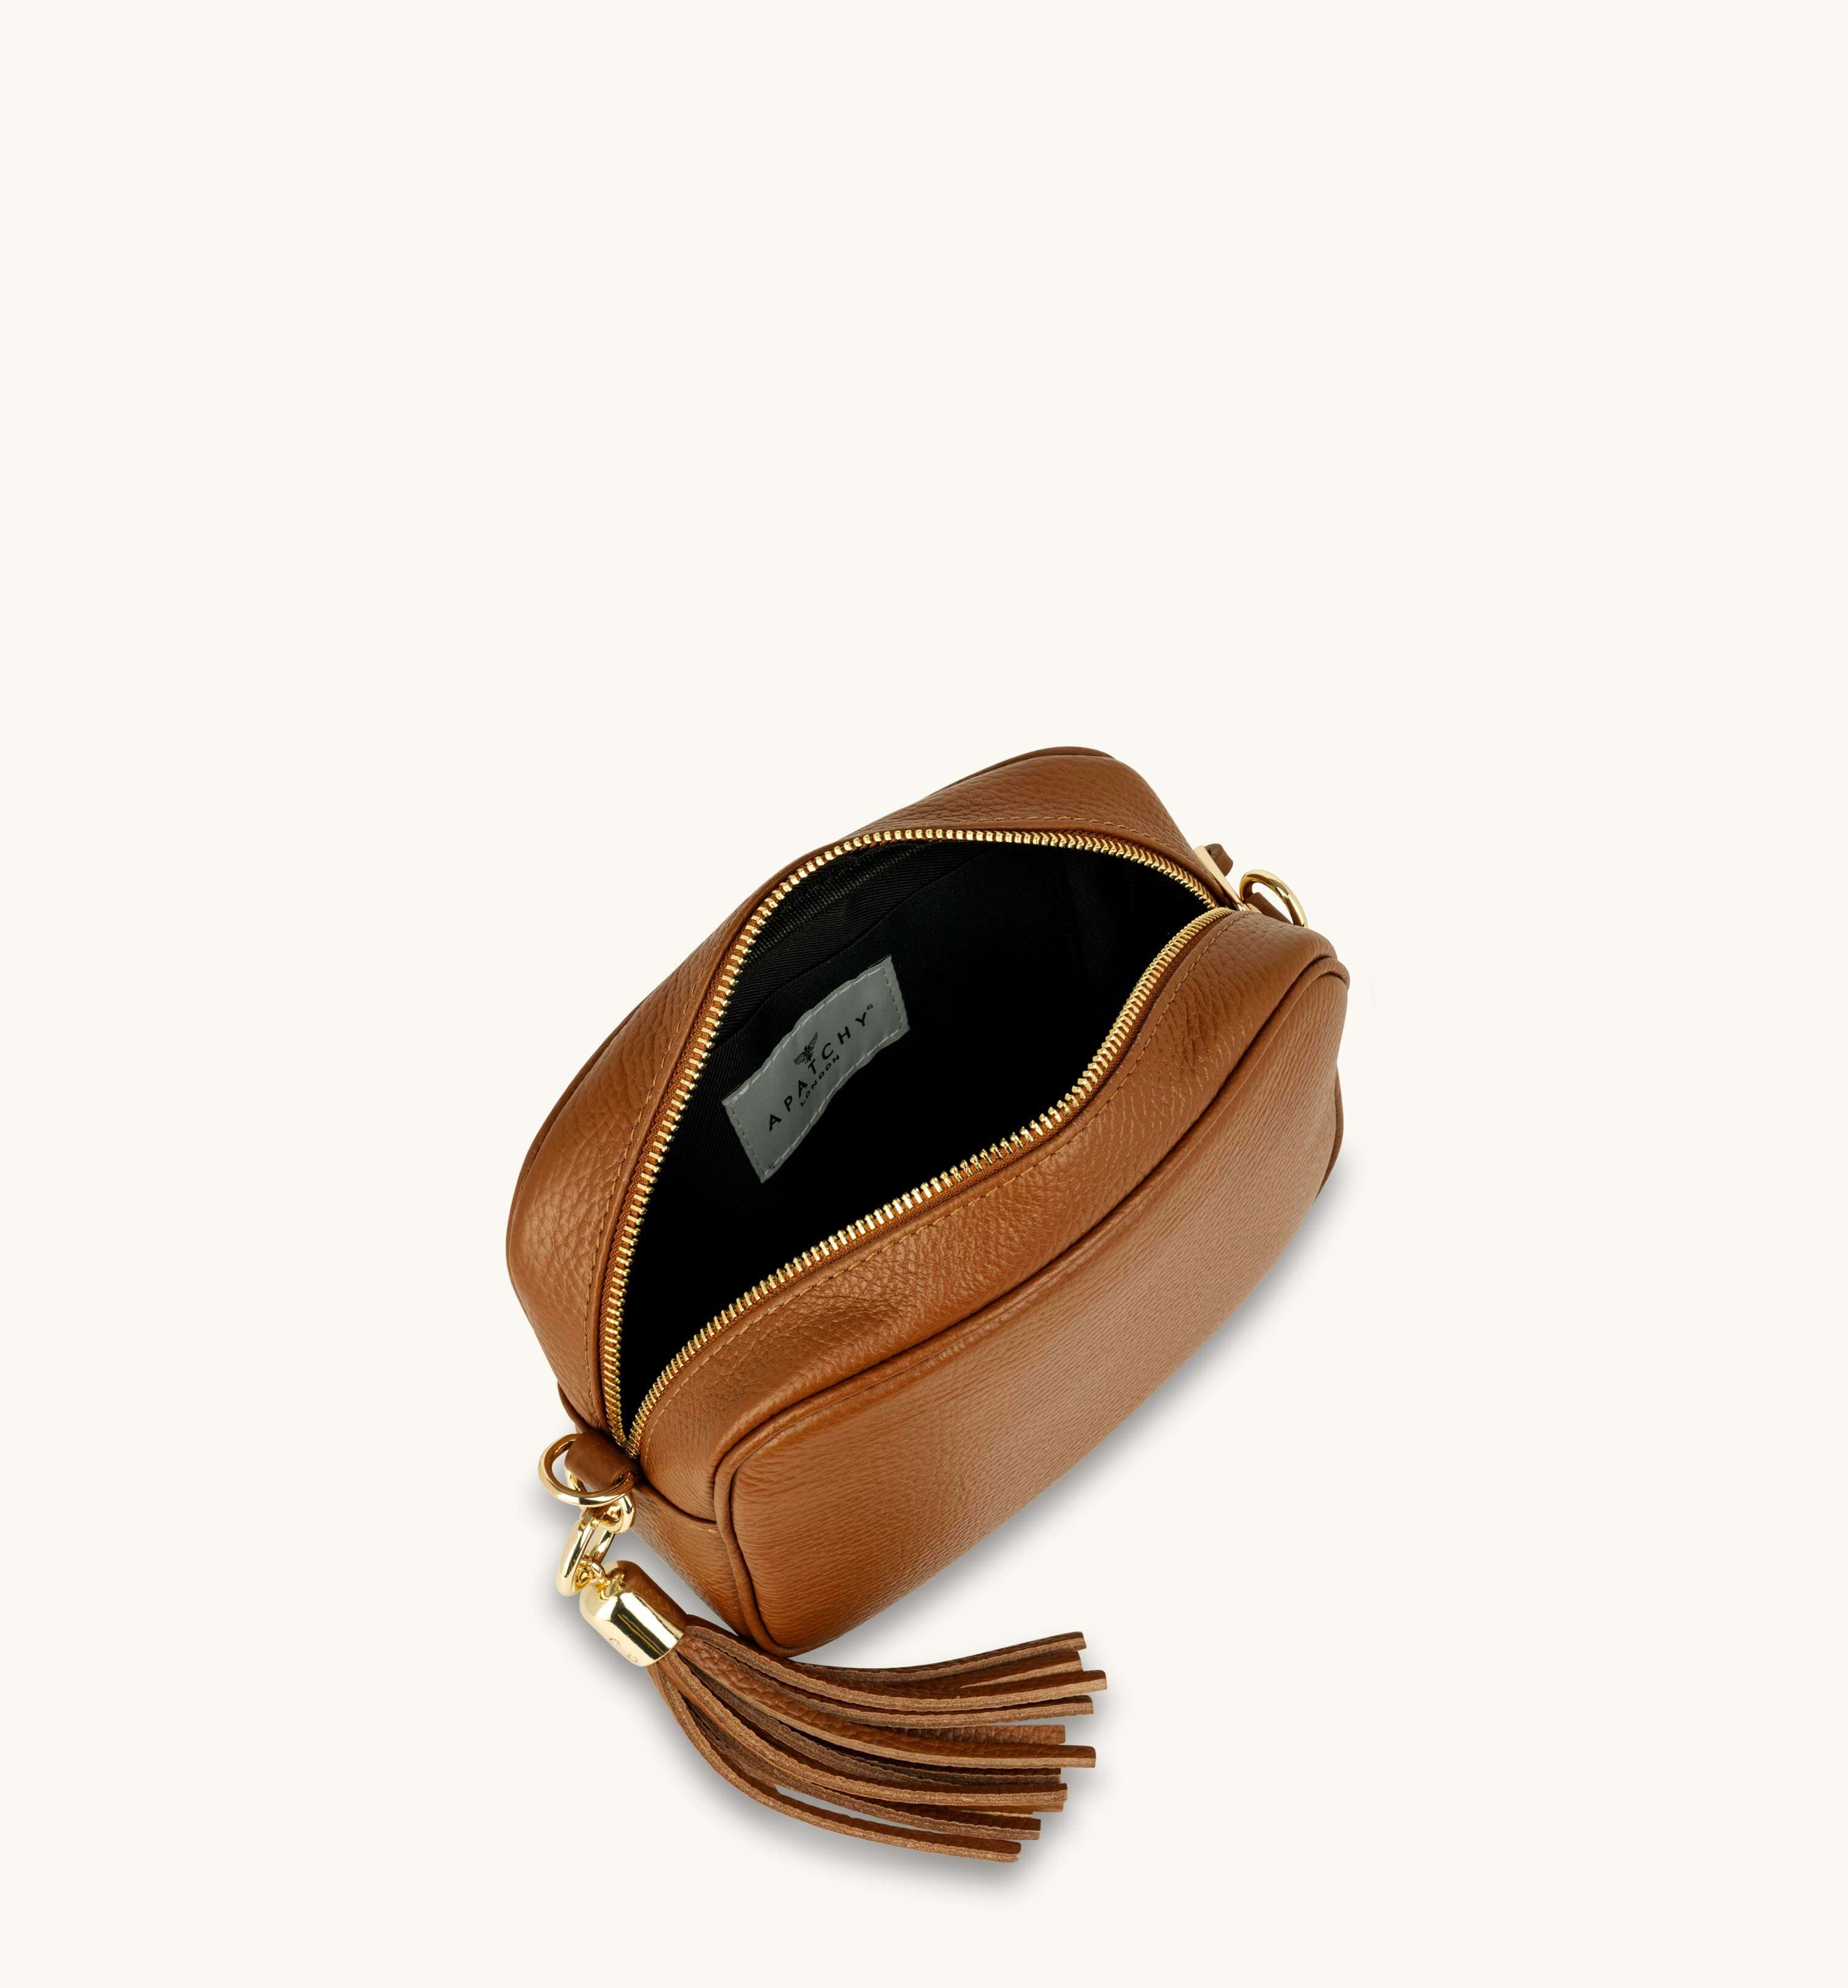 Tan Leather Crossbody Bag